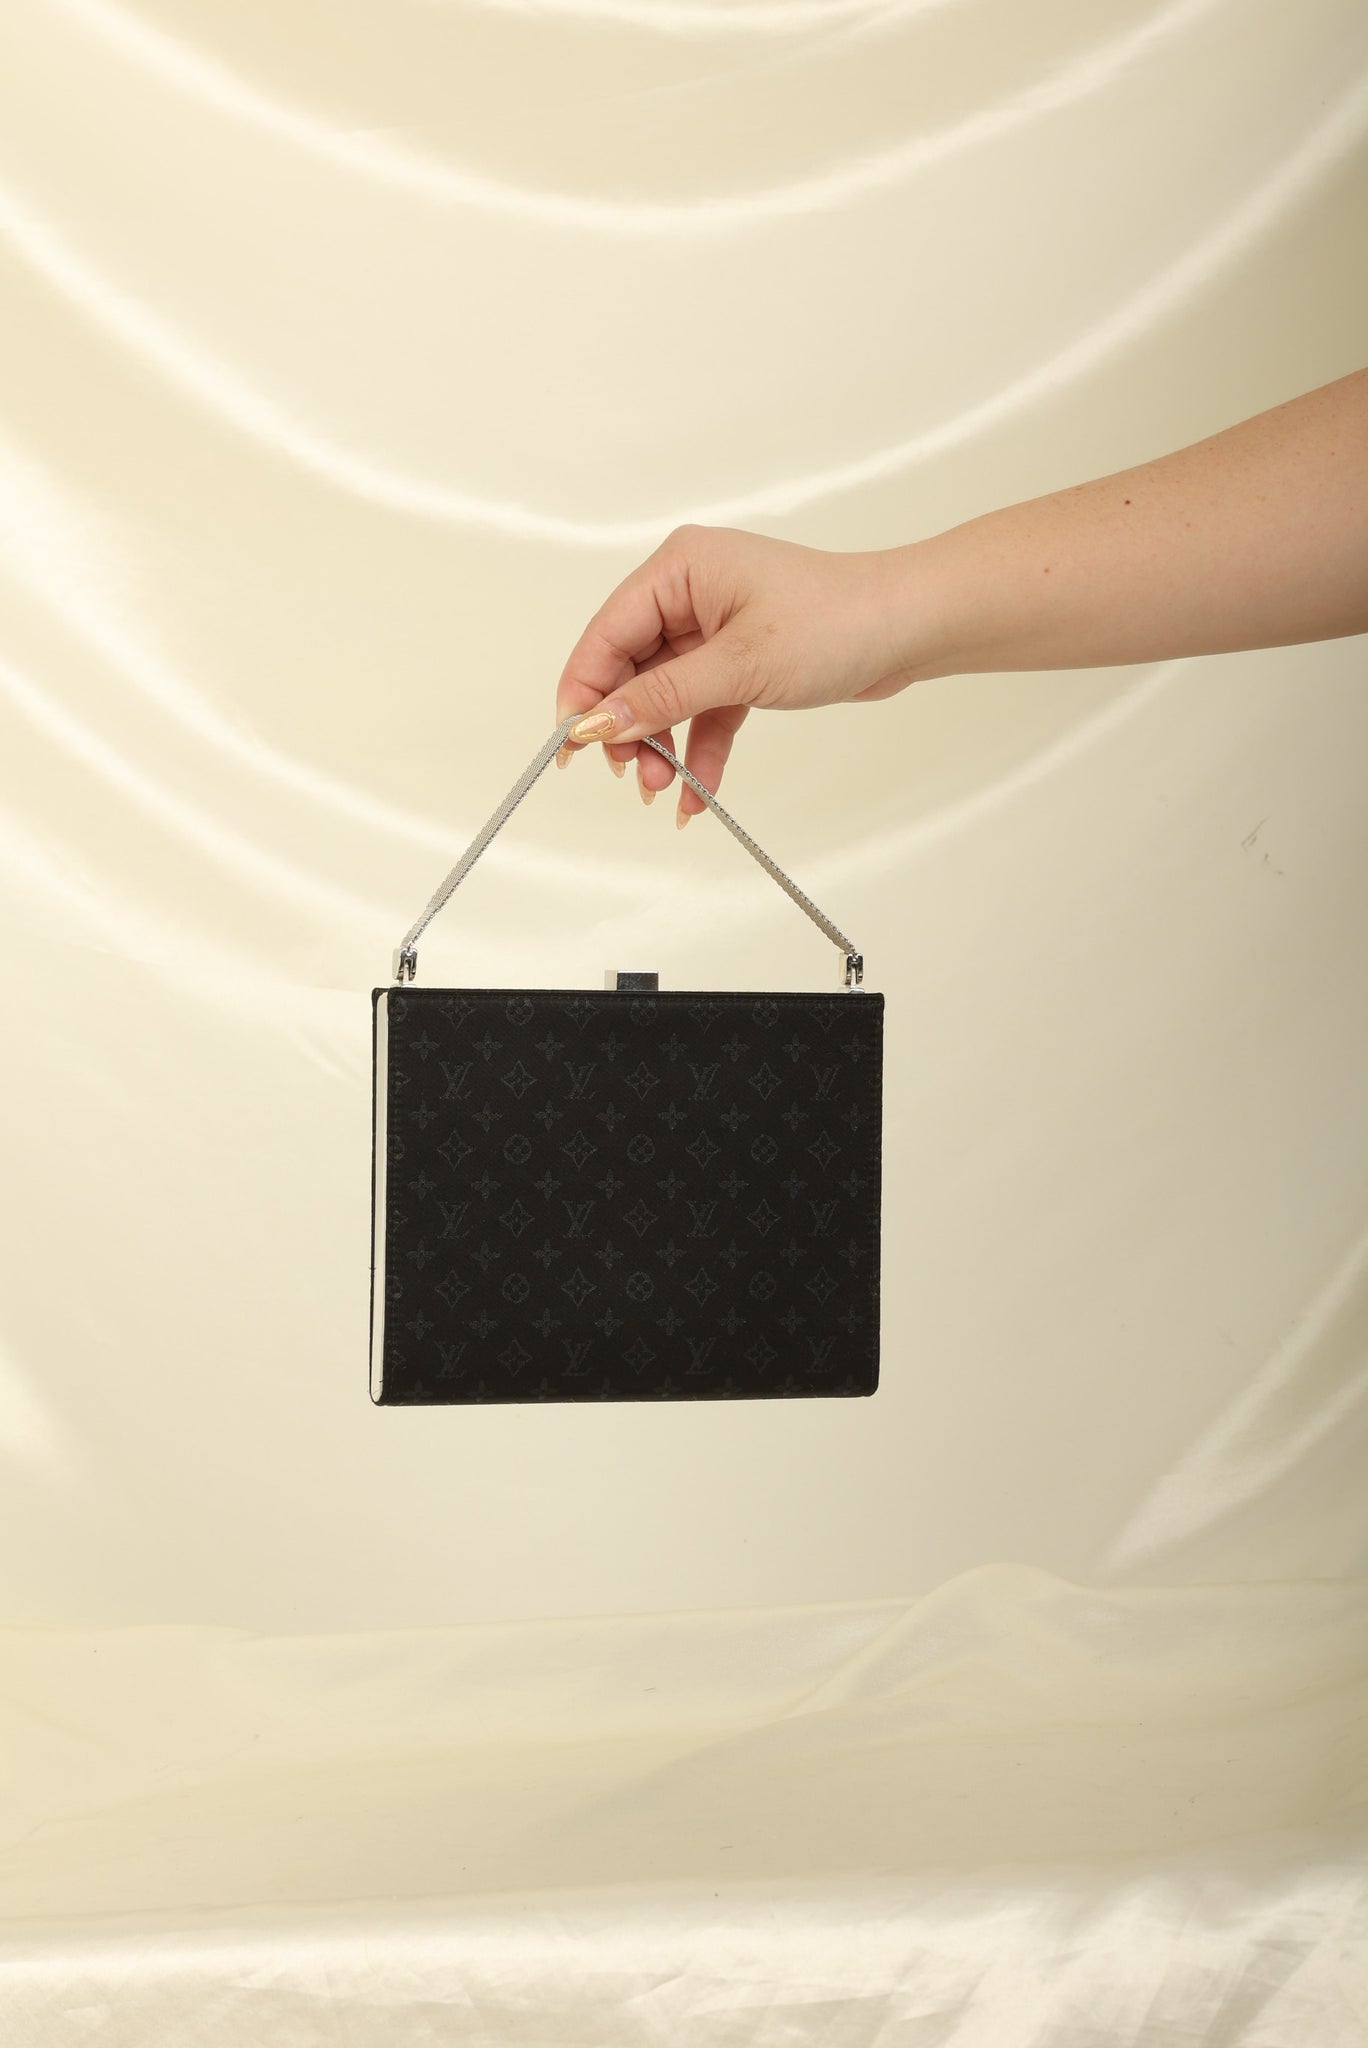 Authentic Louis Vuitton Black Satin Evening Handbag